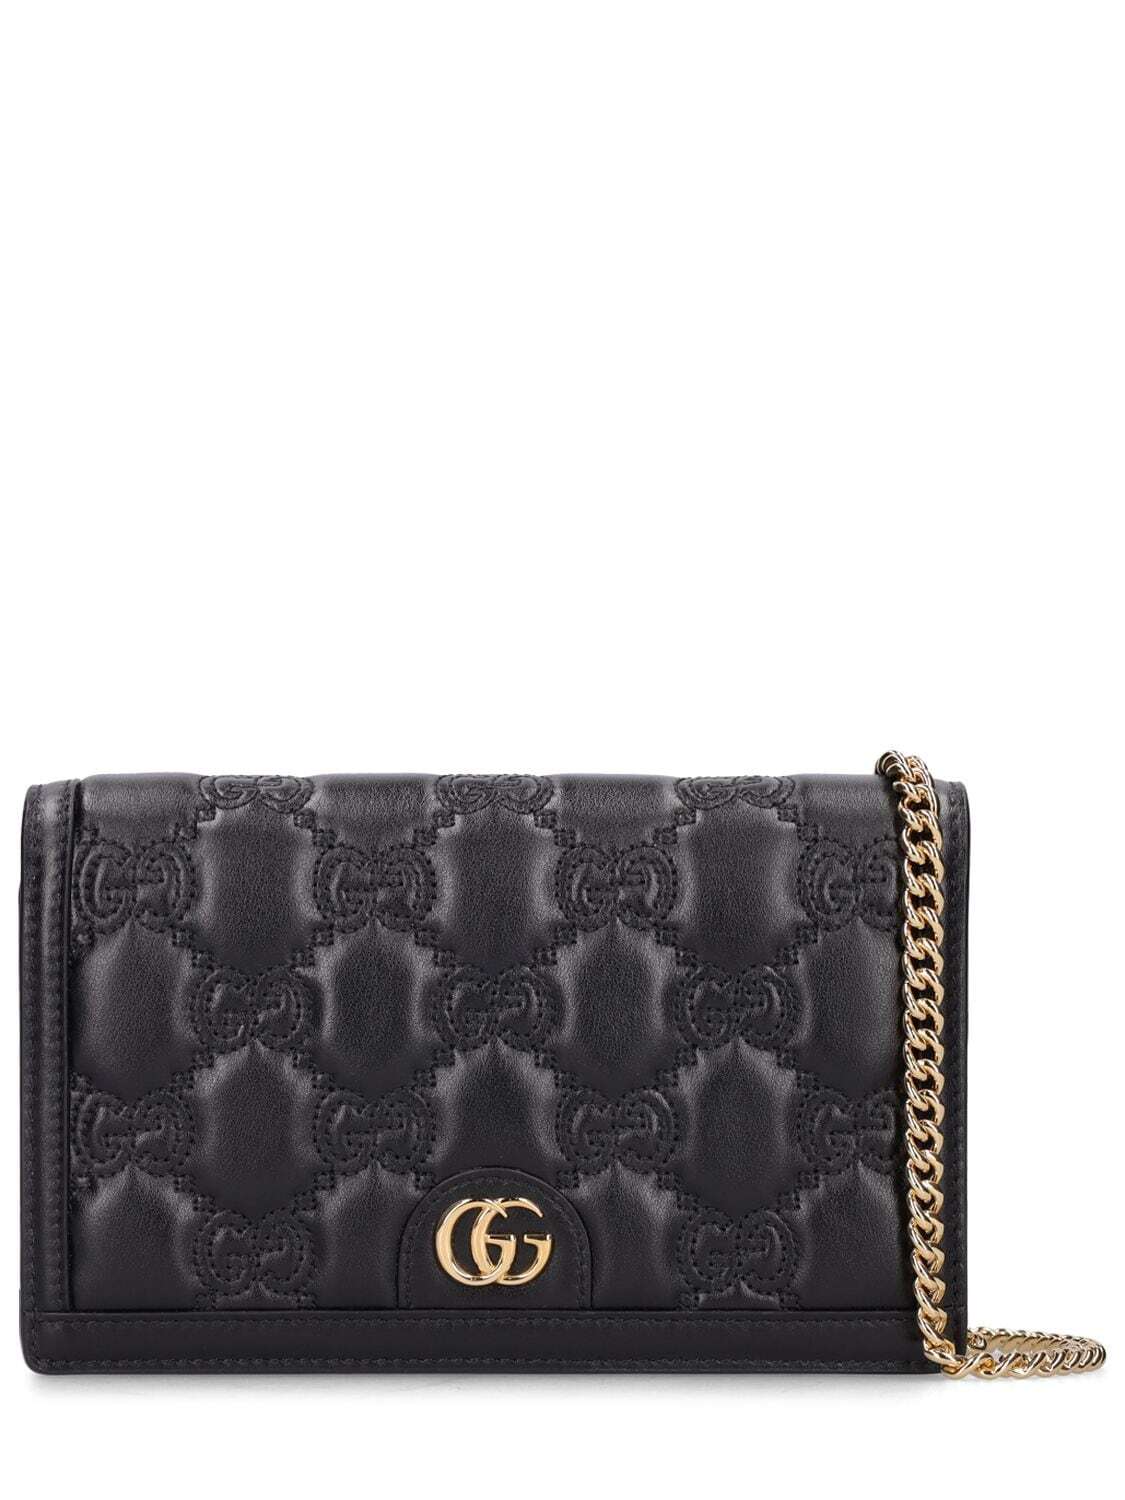 GUCCI Gg Matelassé Leather Wallet Bag W/chain in black